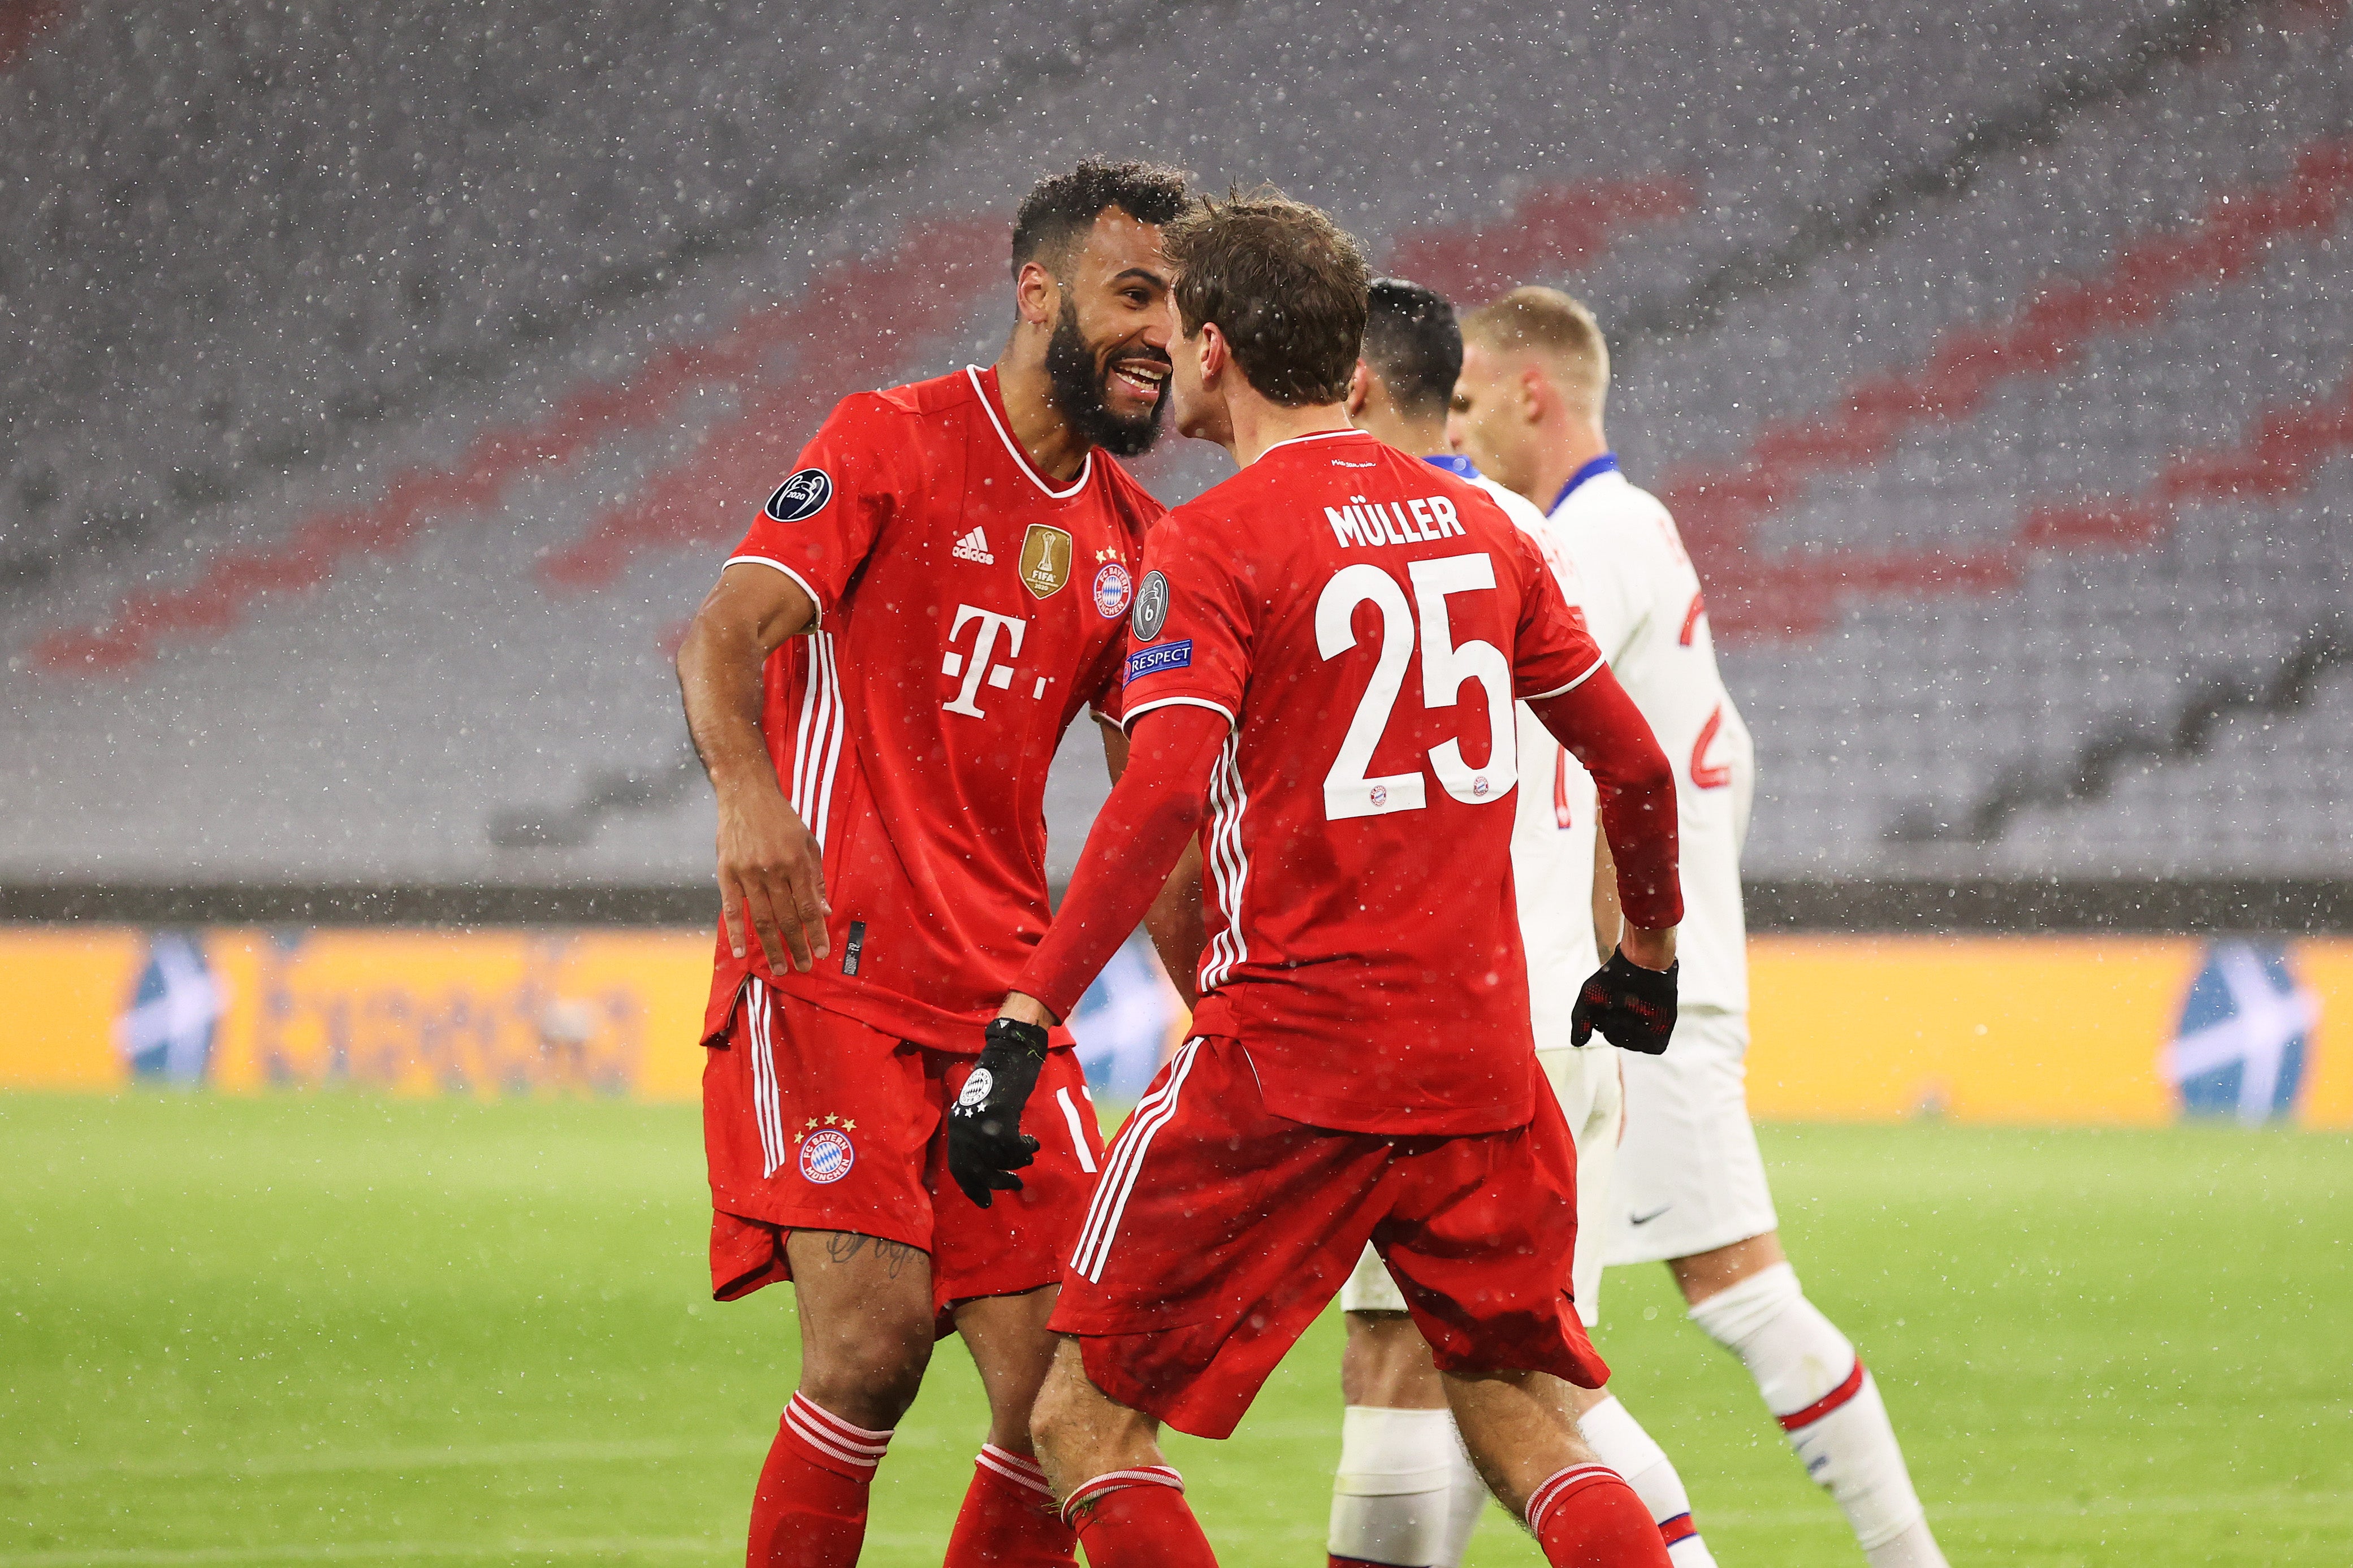 Thomas Muller and Eric Maxim Choupo-Moting scored Bayern’s goals